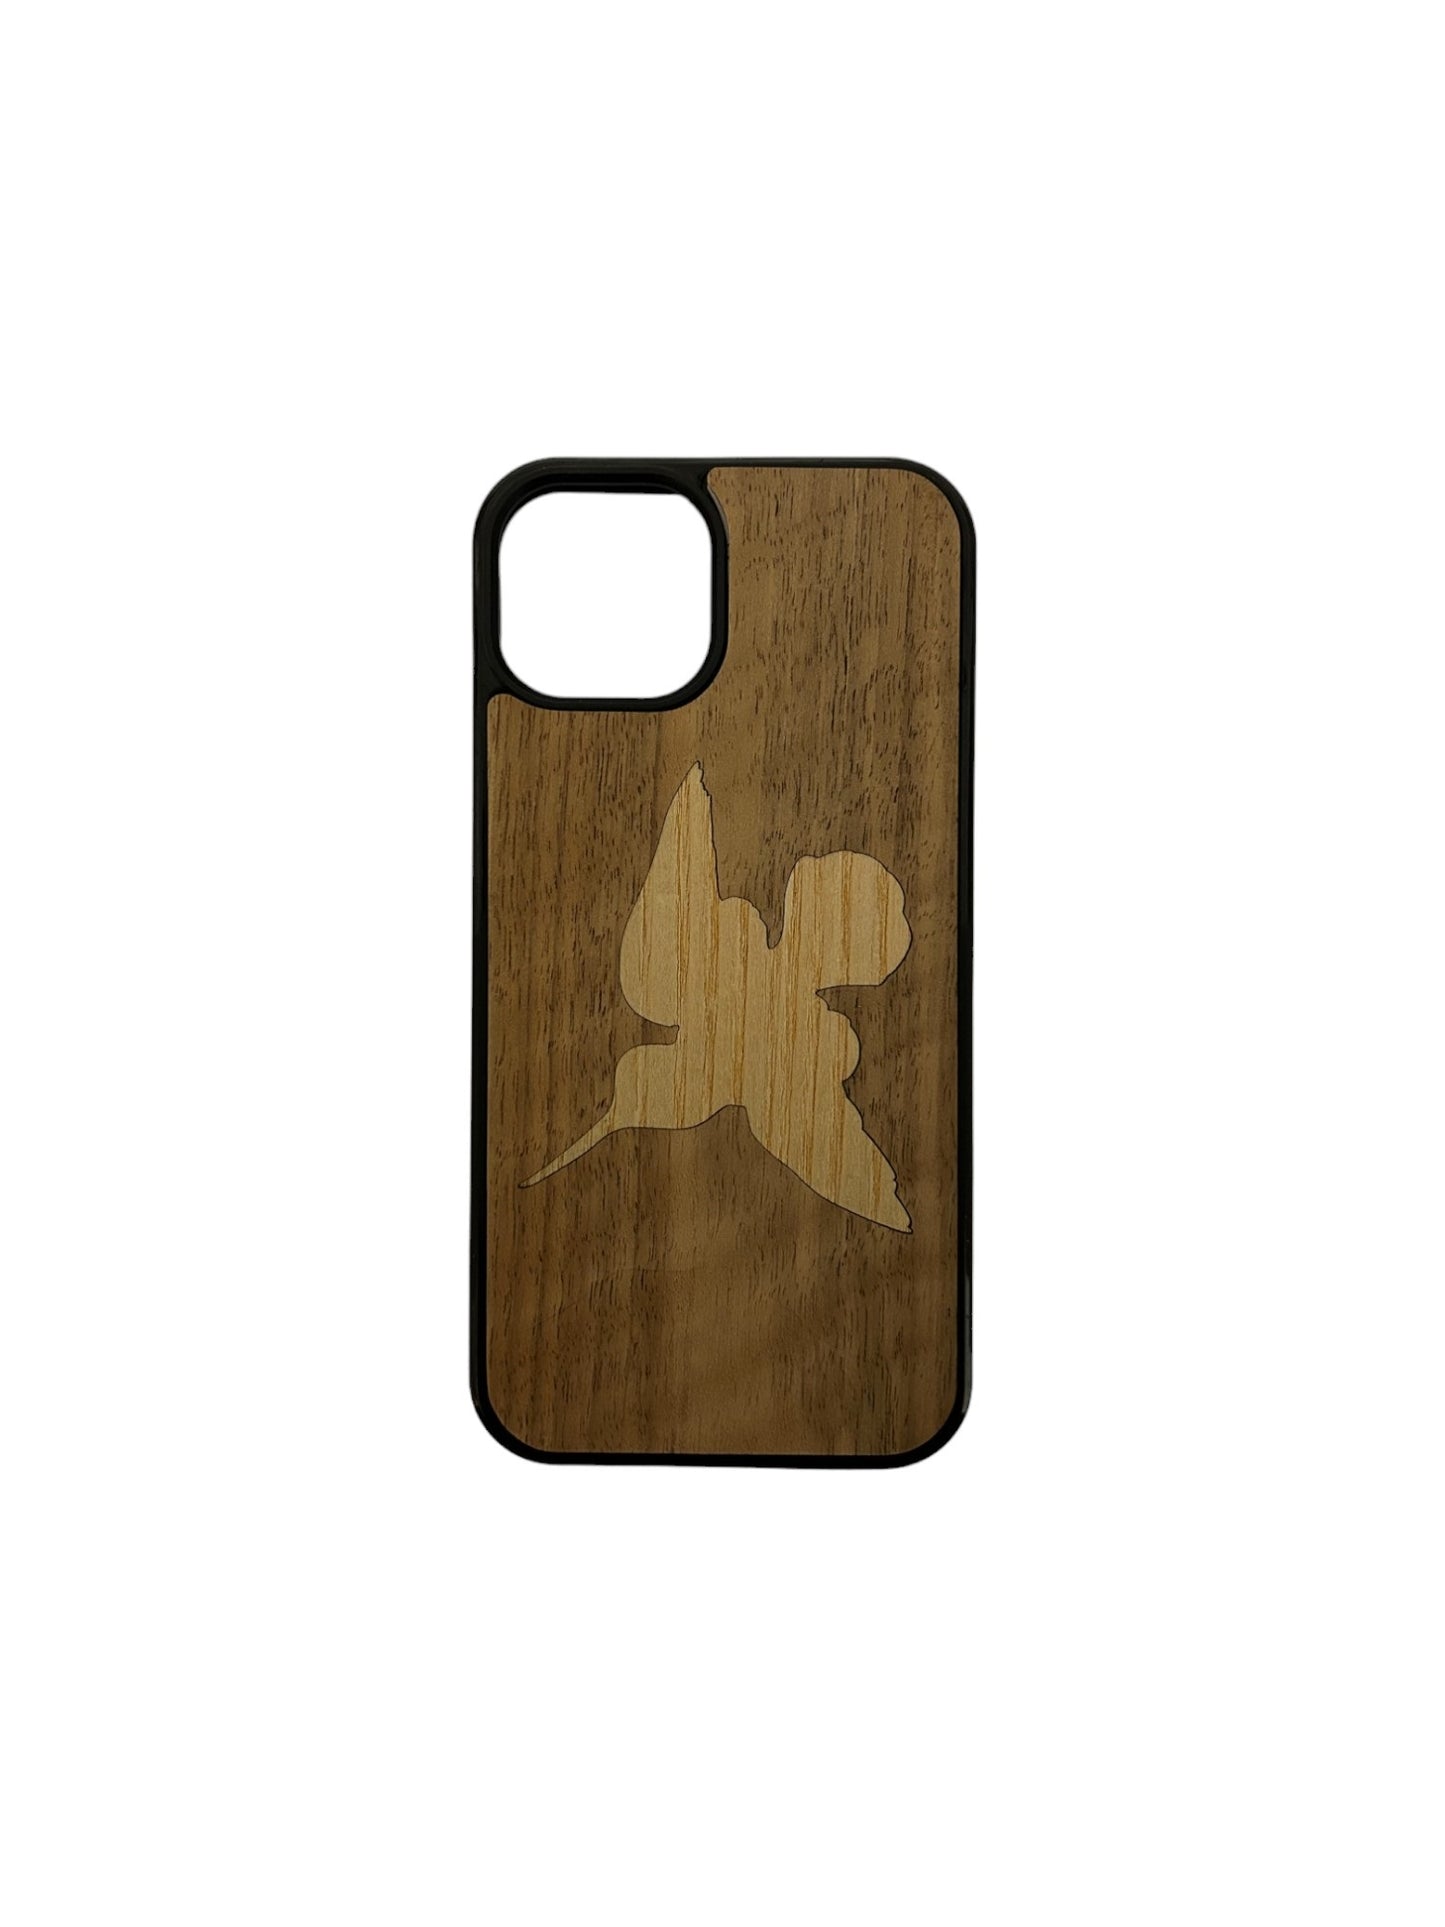 Iphone case - Woodcock